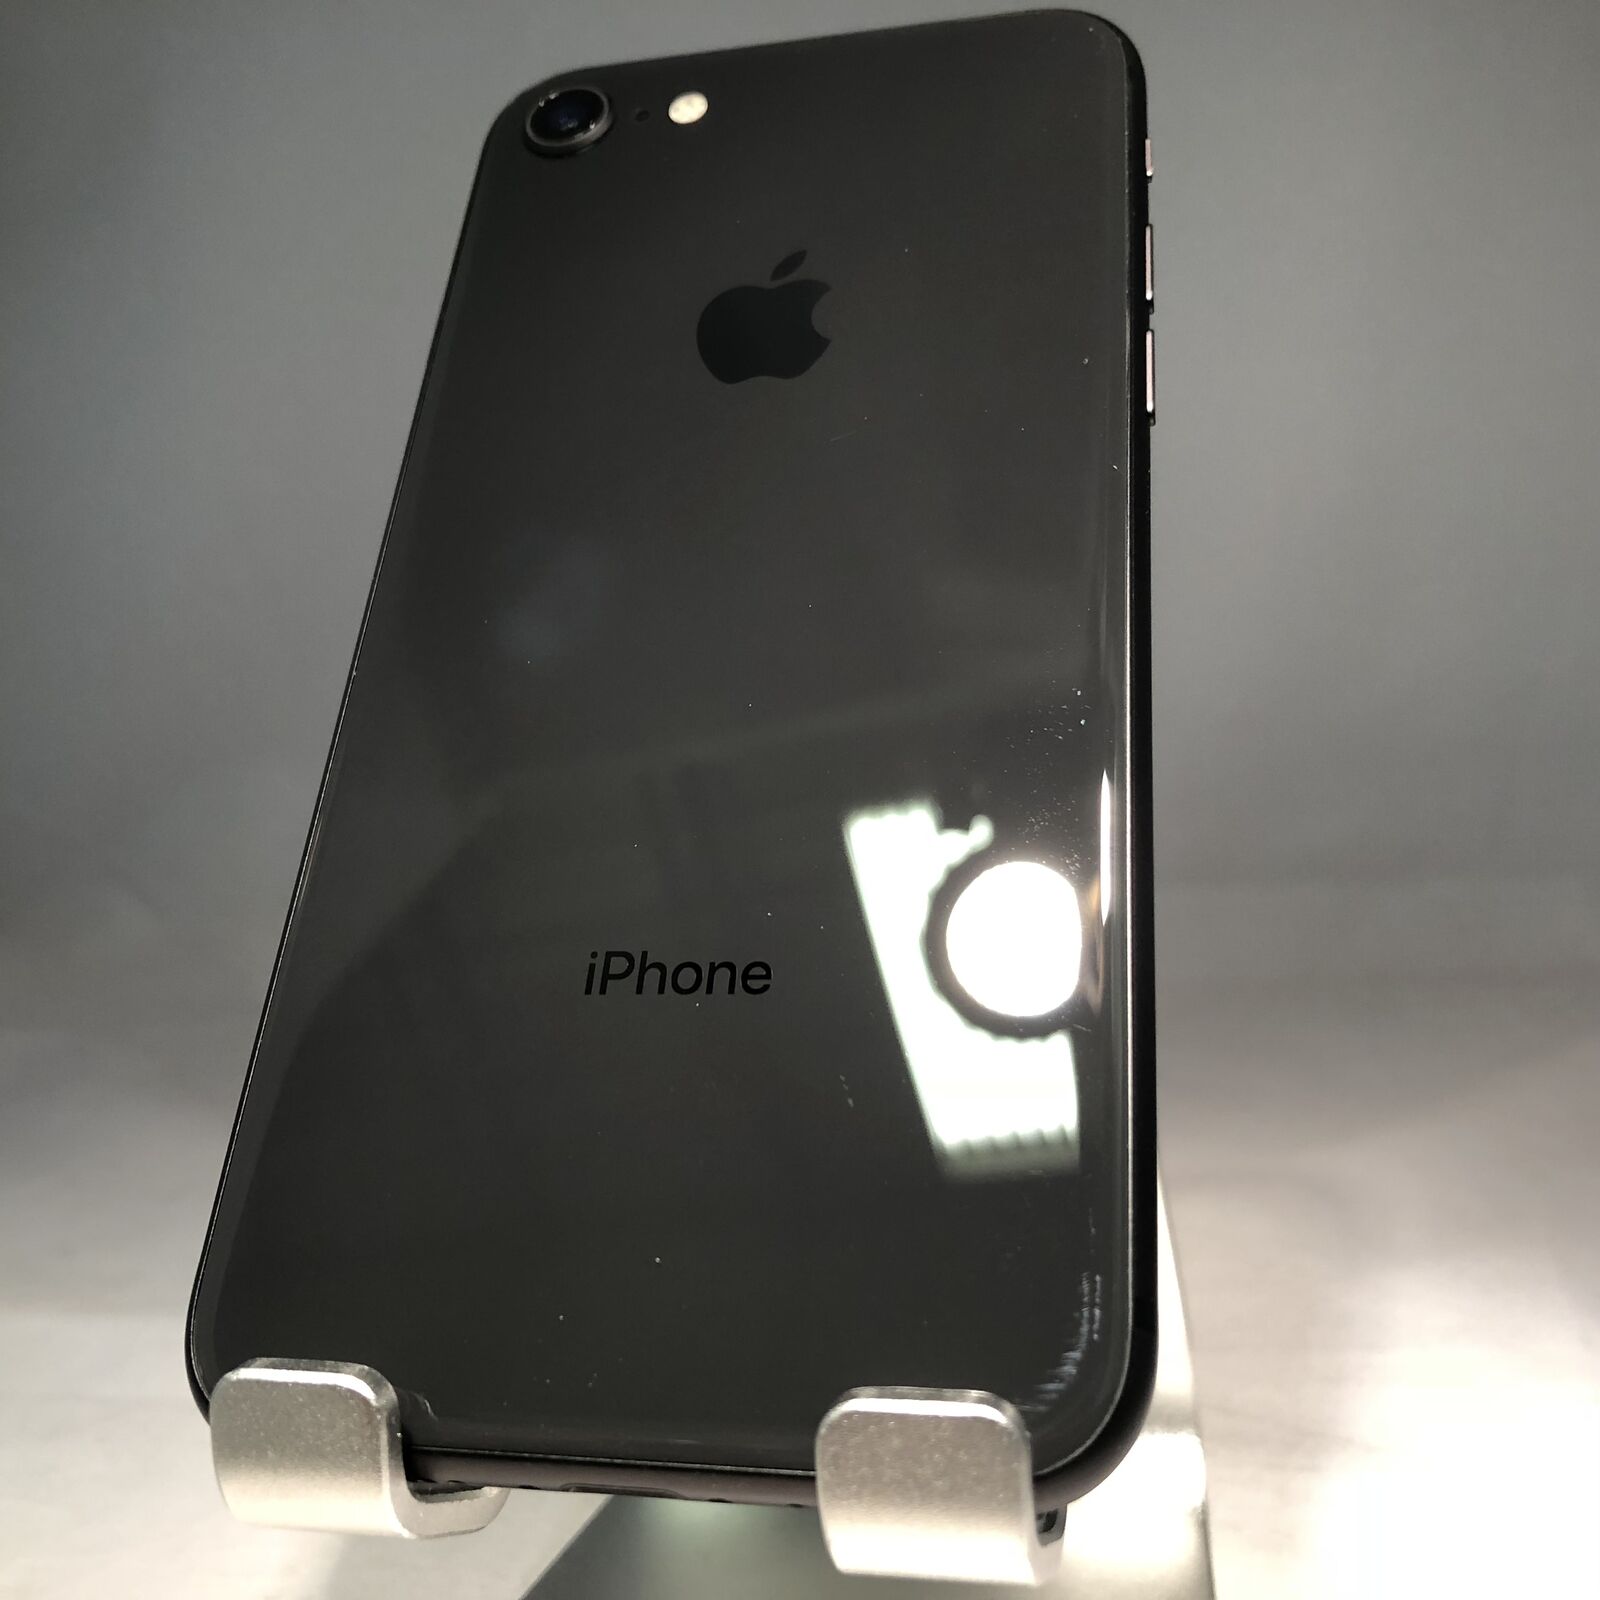 Apple iPhone 8 256GB Space Gray Unlocked Fair Condition | eBay